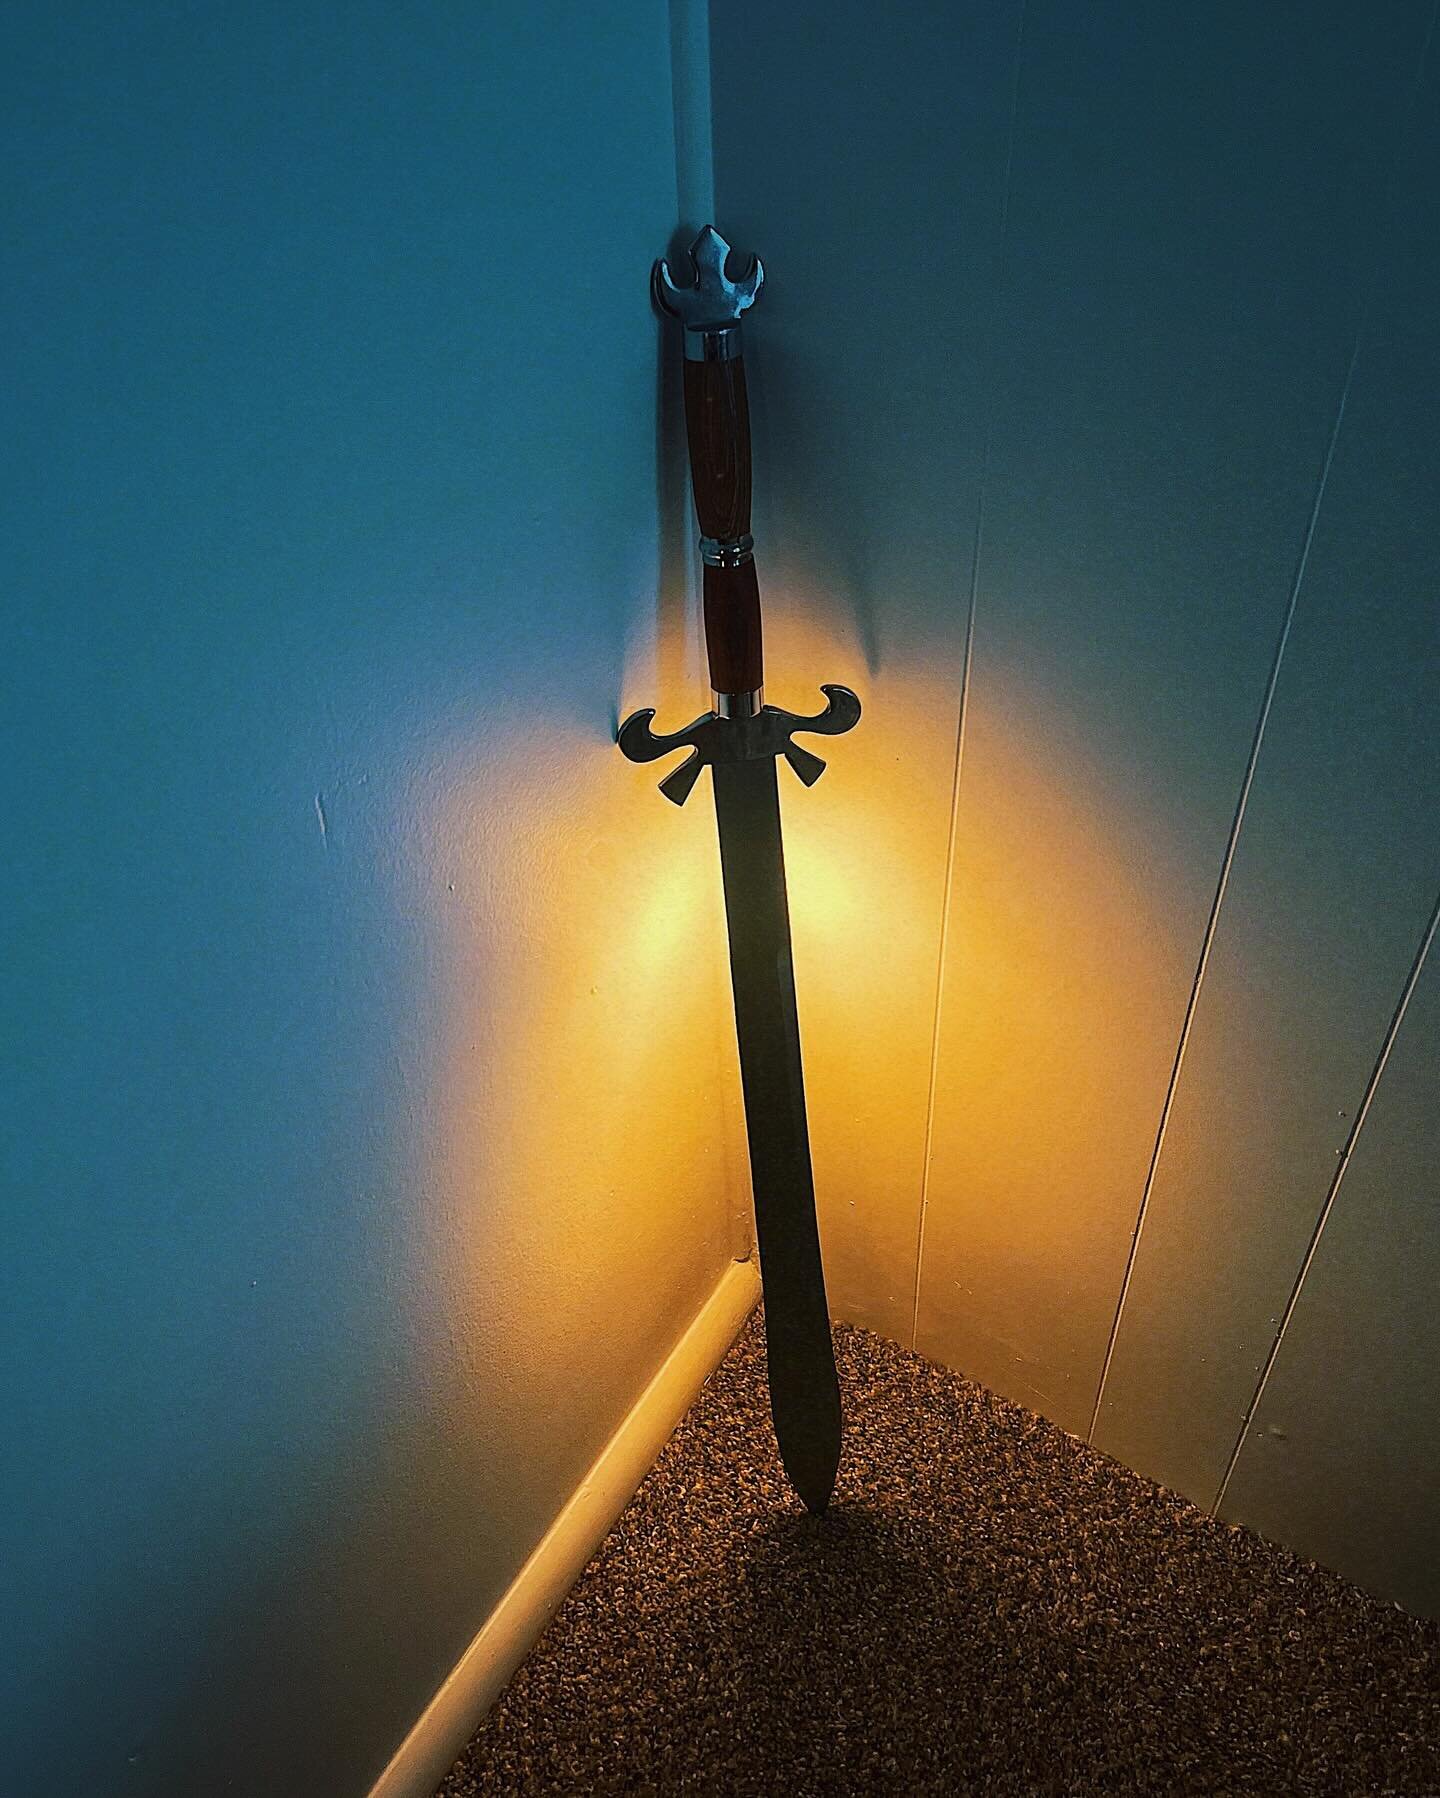 Something everybody needs. Mid-evil meets modern with this motion activated self defense nightlight. 🗡️💡

#light #sword #lightsaber #nightlight #lightemup